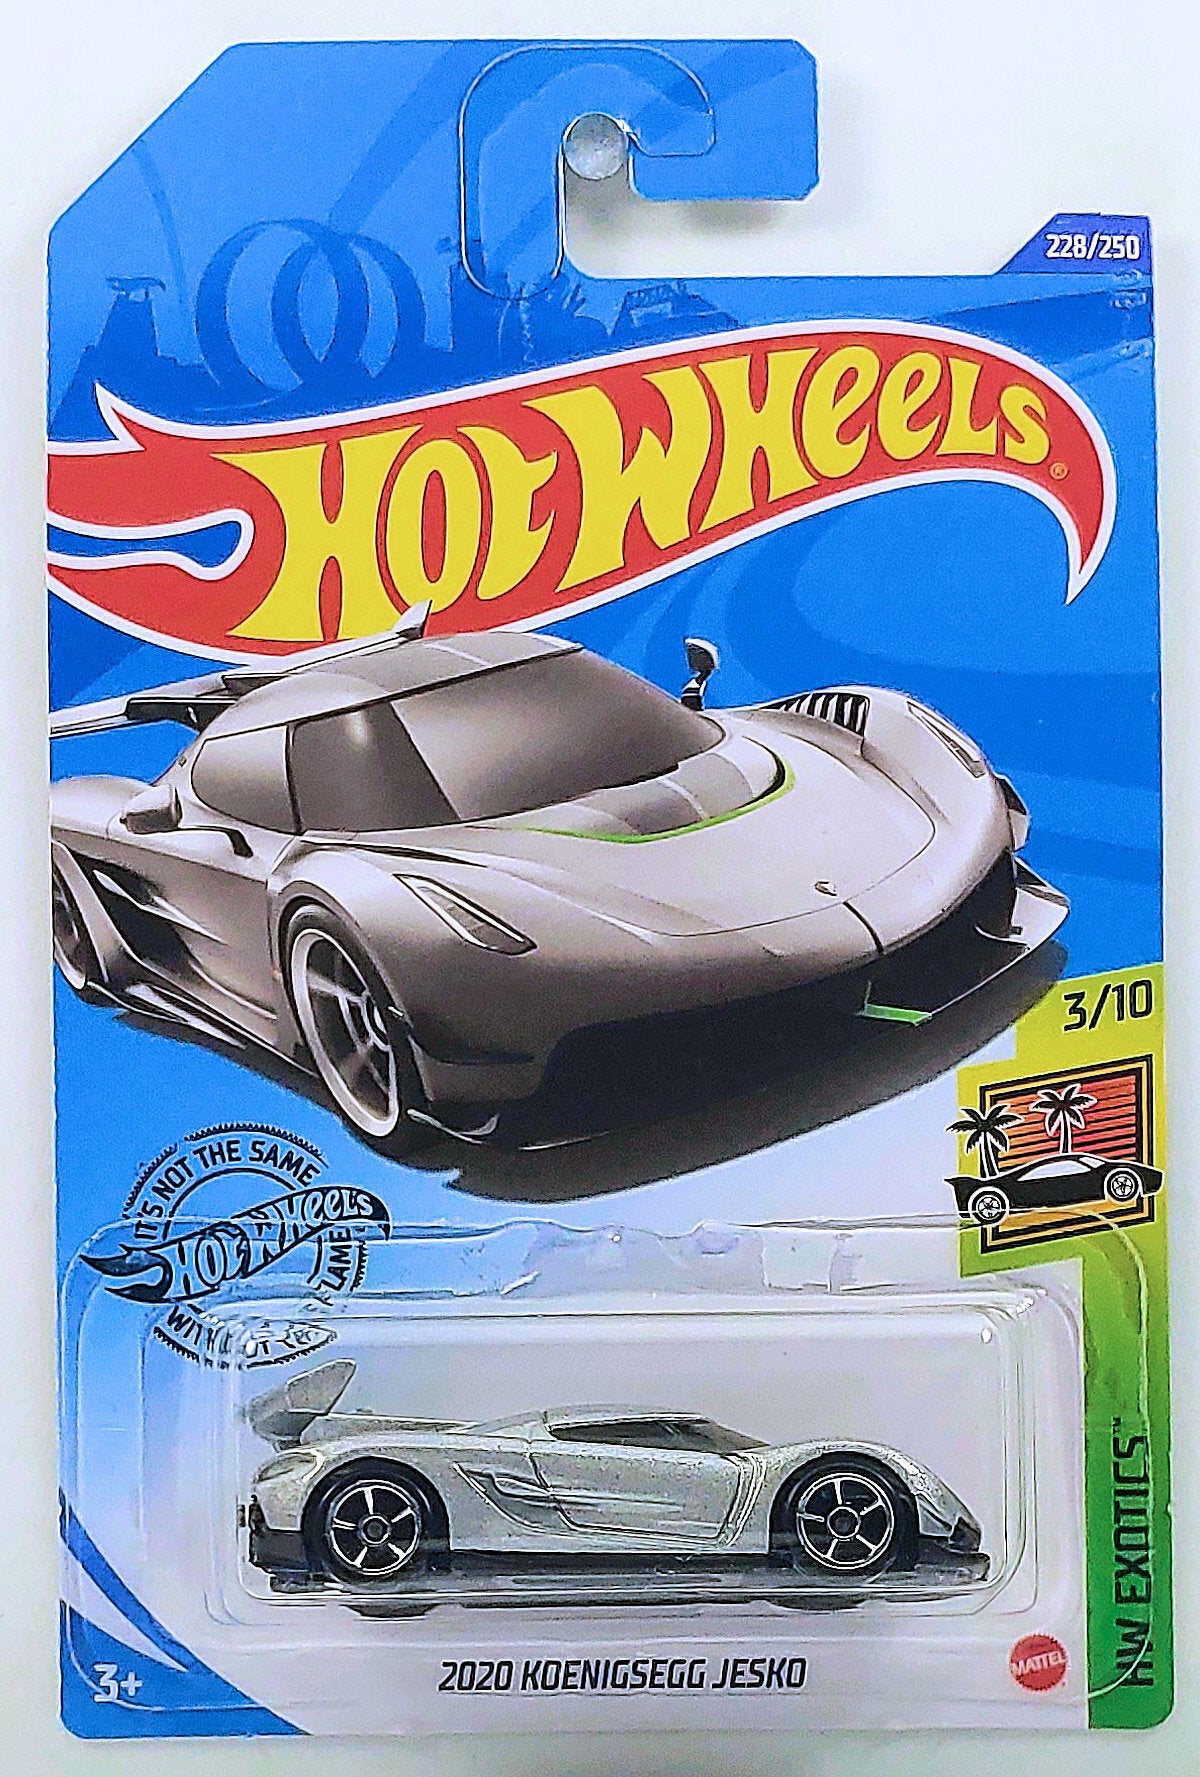 Hot Wheels 2020 - Collector # 228/250 - HW Exotics 3/10 - New Models - 2020 Koenigsegg Jesko - Silver - IC